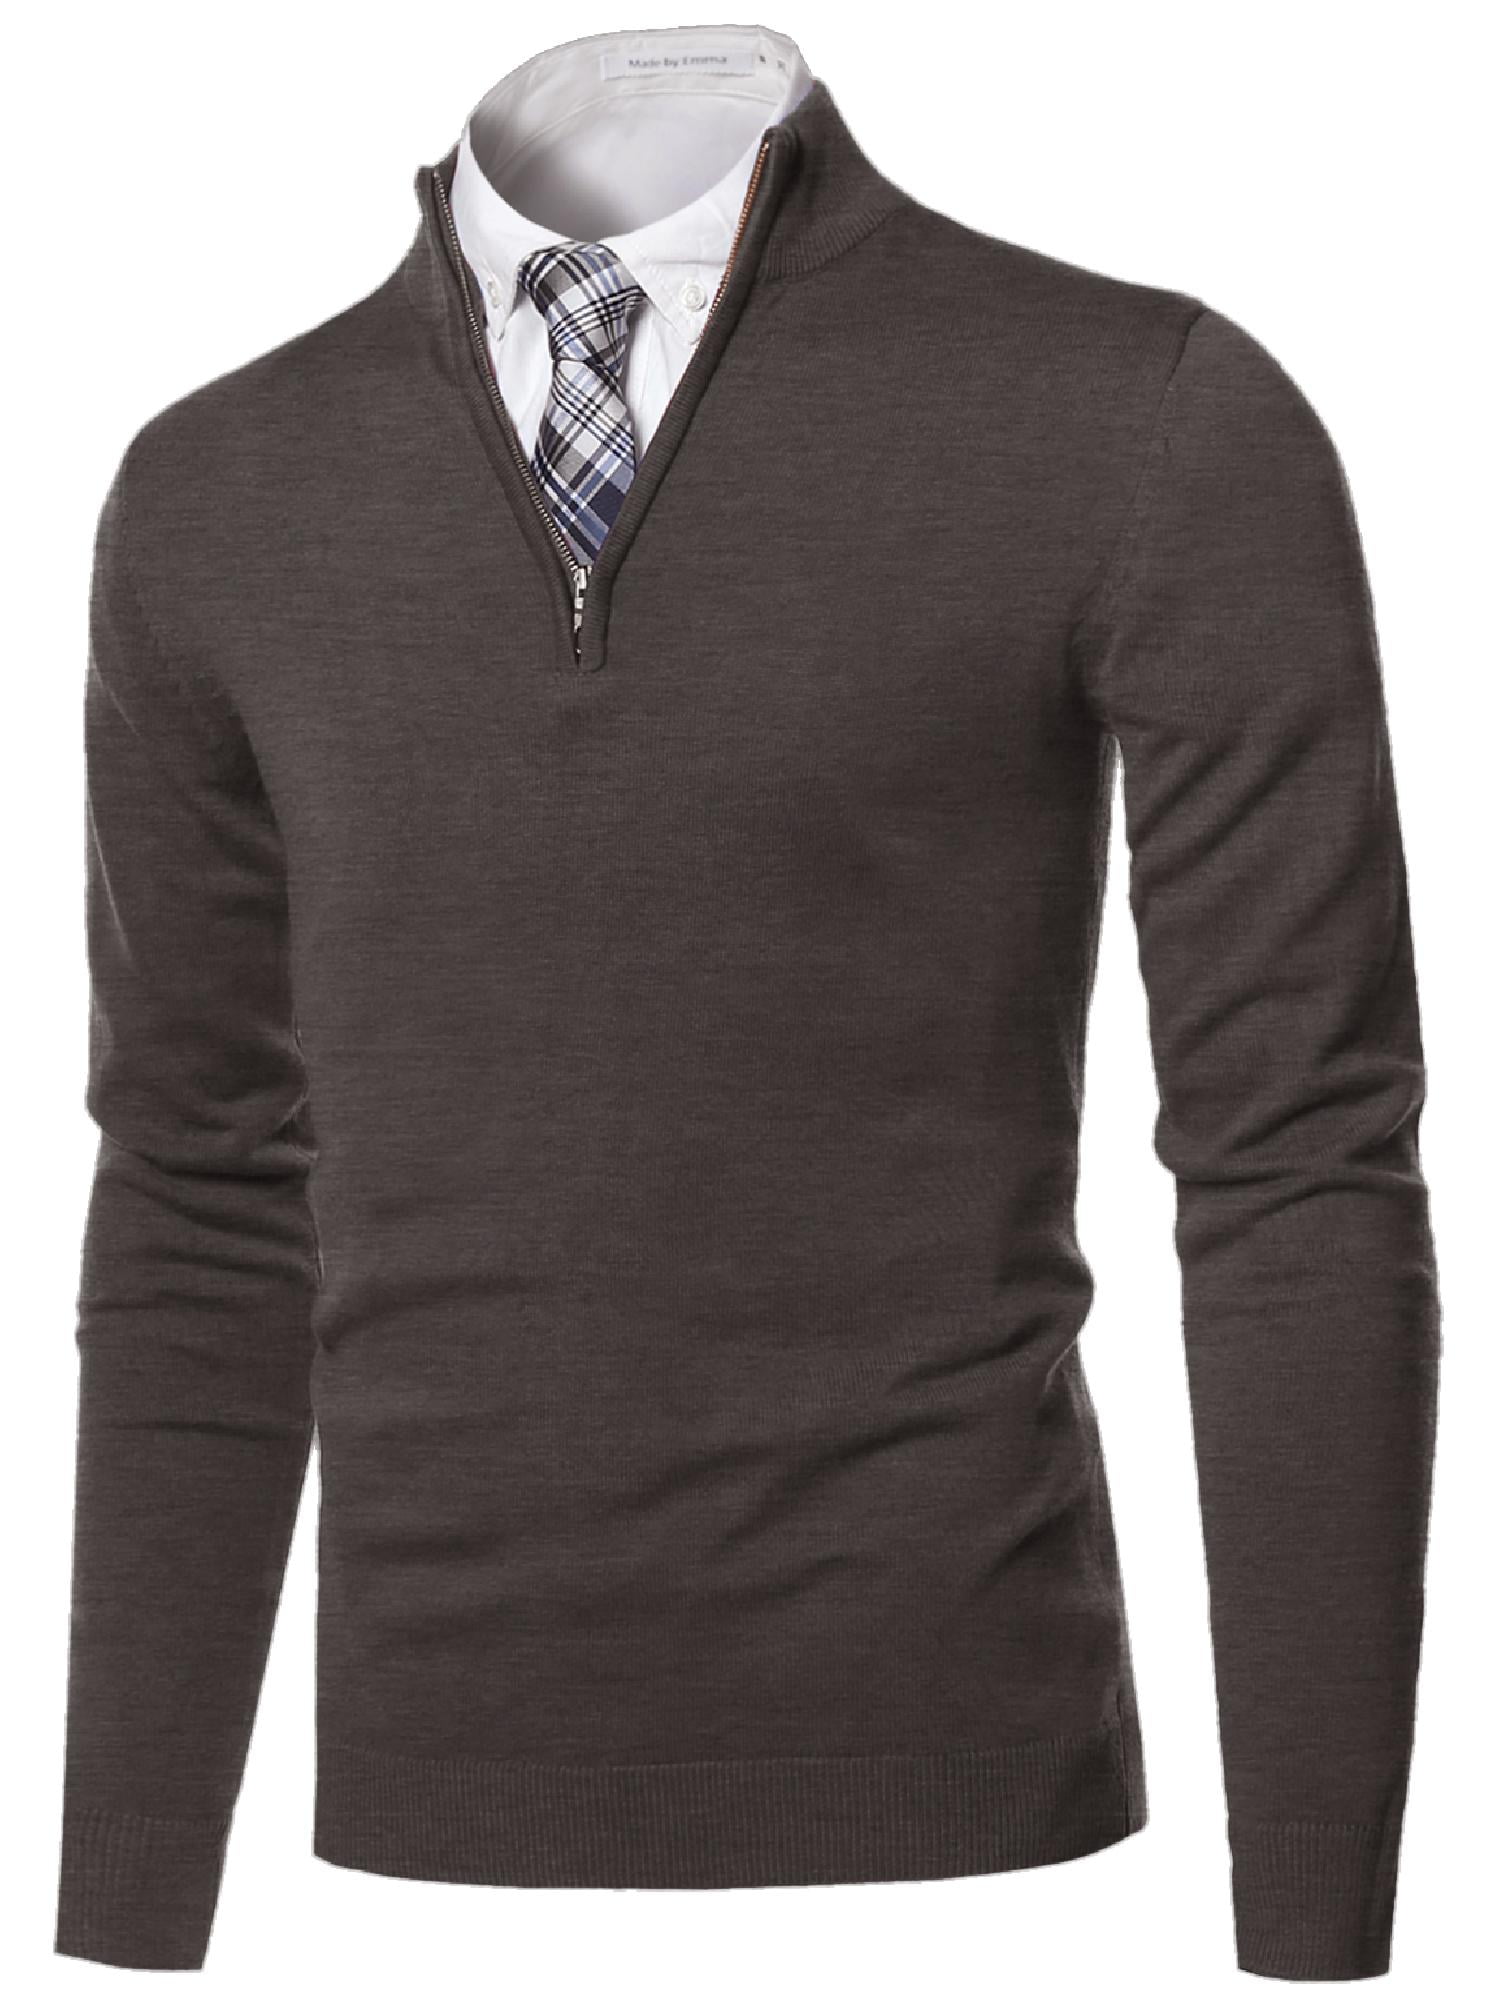 FashionOutfit Men's Classic Half Zip Up Mock Neck Basic Sweater Top ...